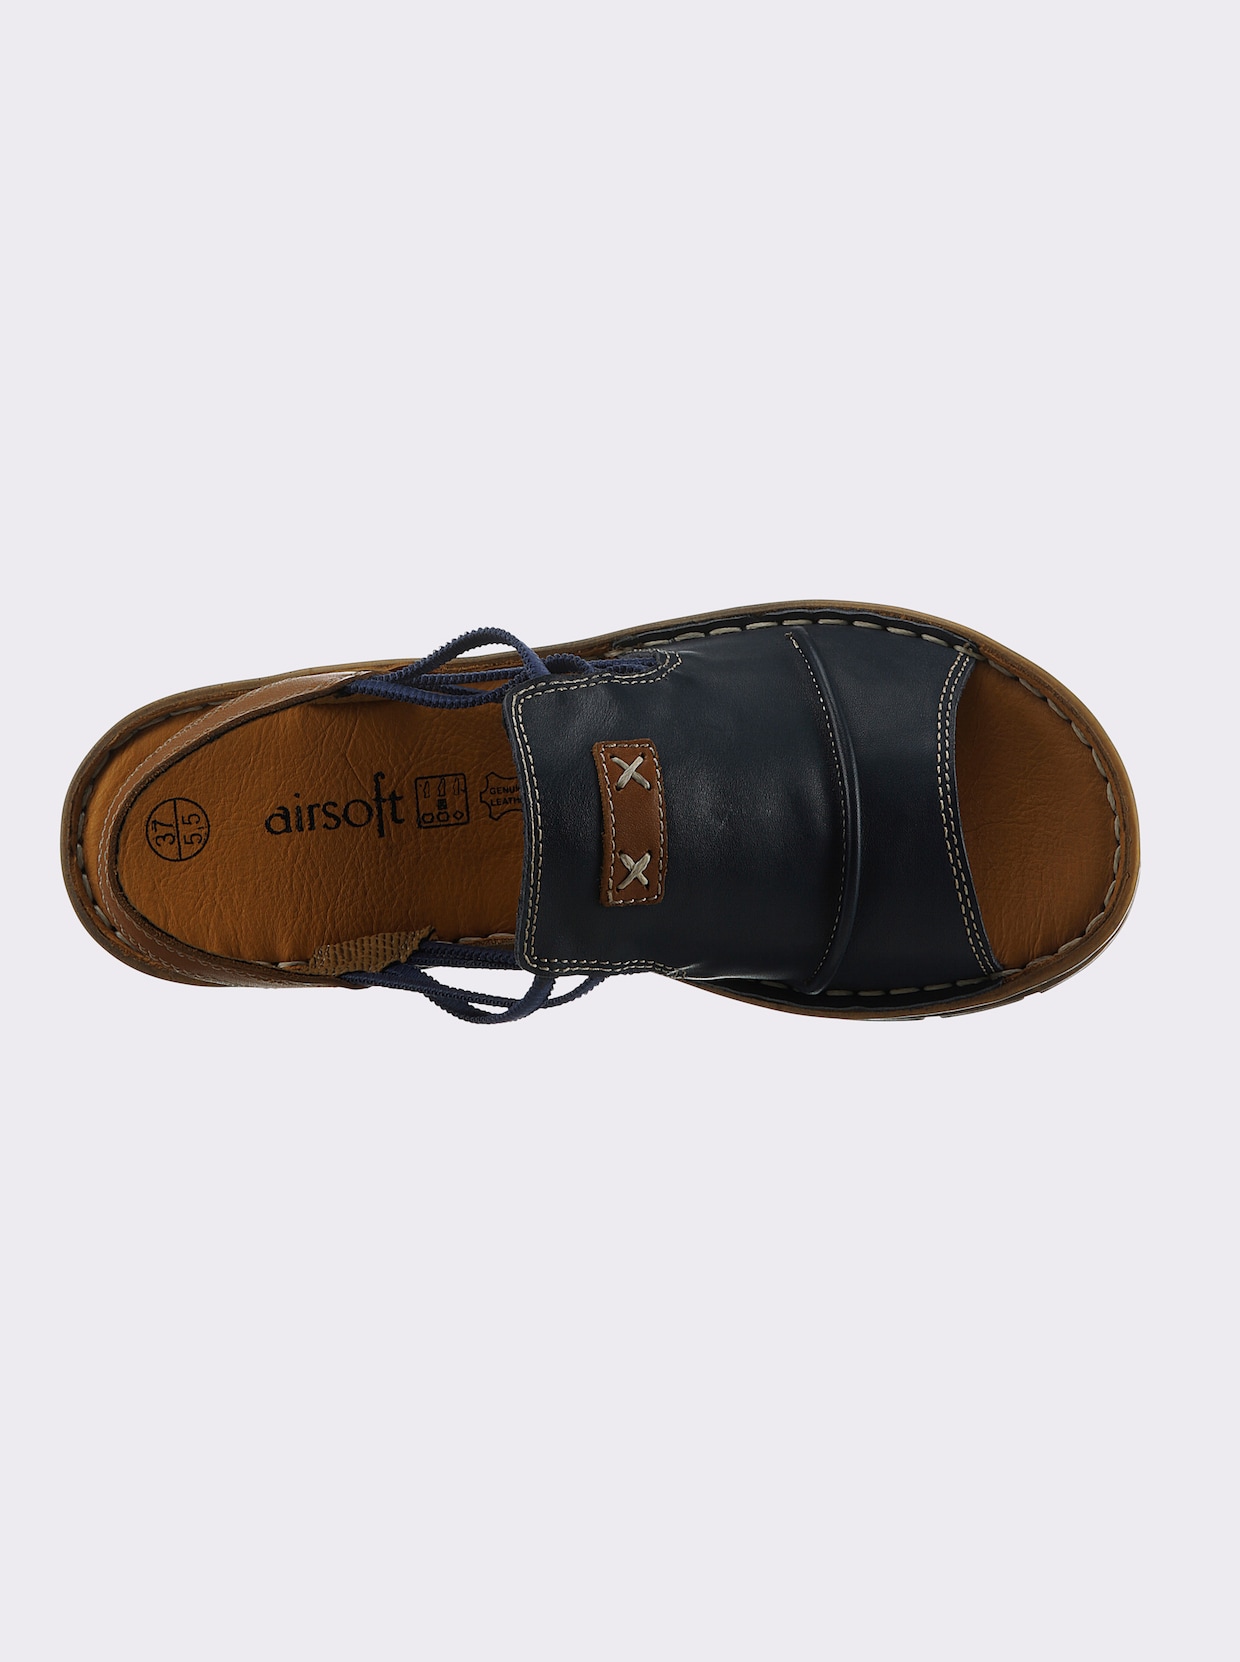 airsoft modern+ Sandalette - dunkelblau